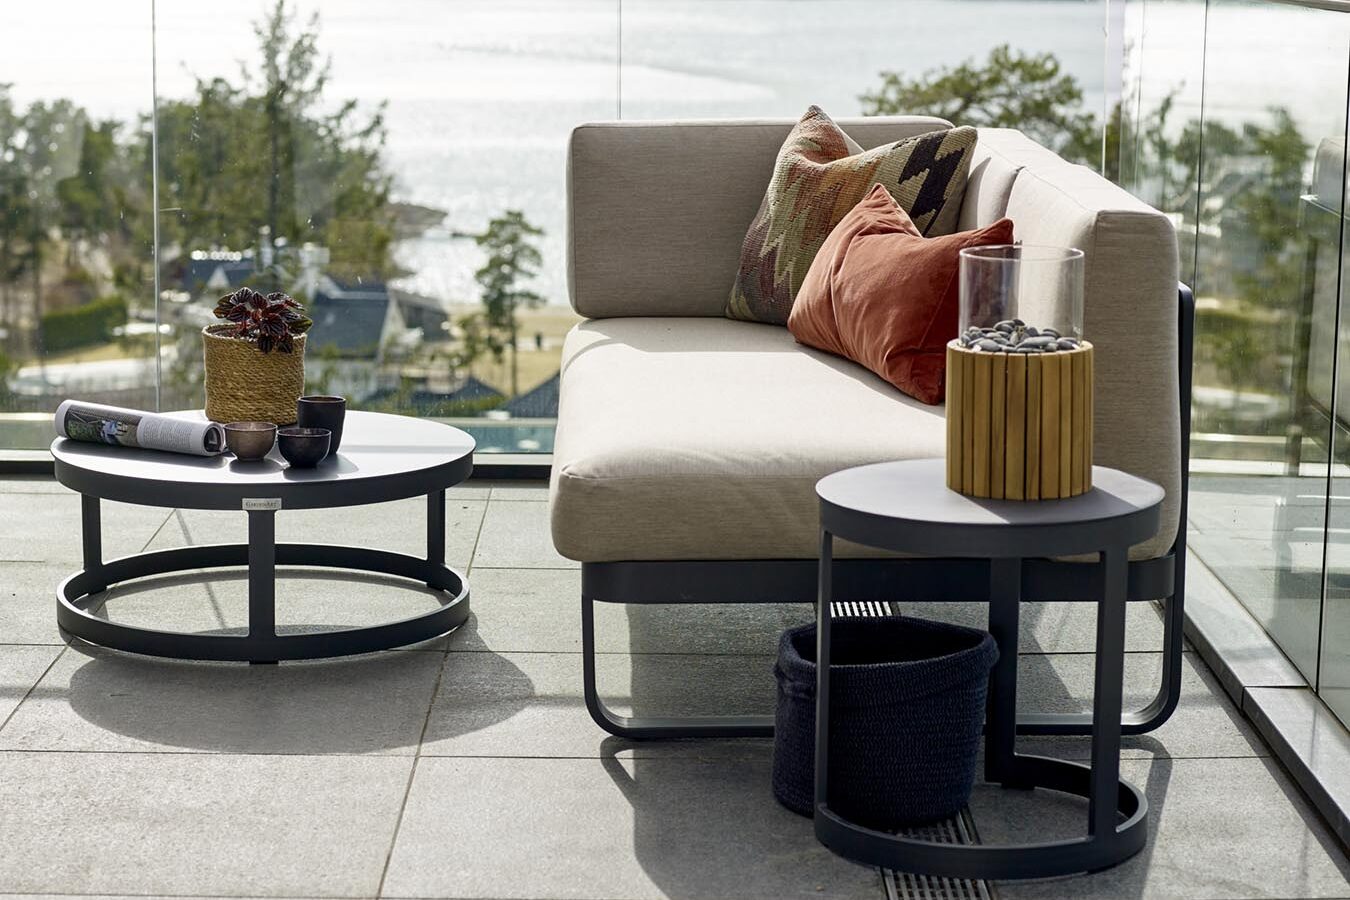 Liten modulsofa med rundt bord i sola på flott terrasse med fantastisk utsikt